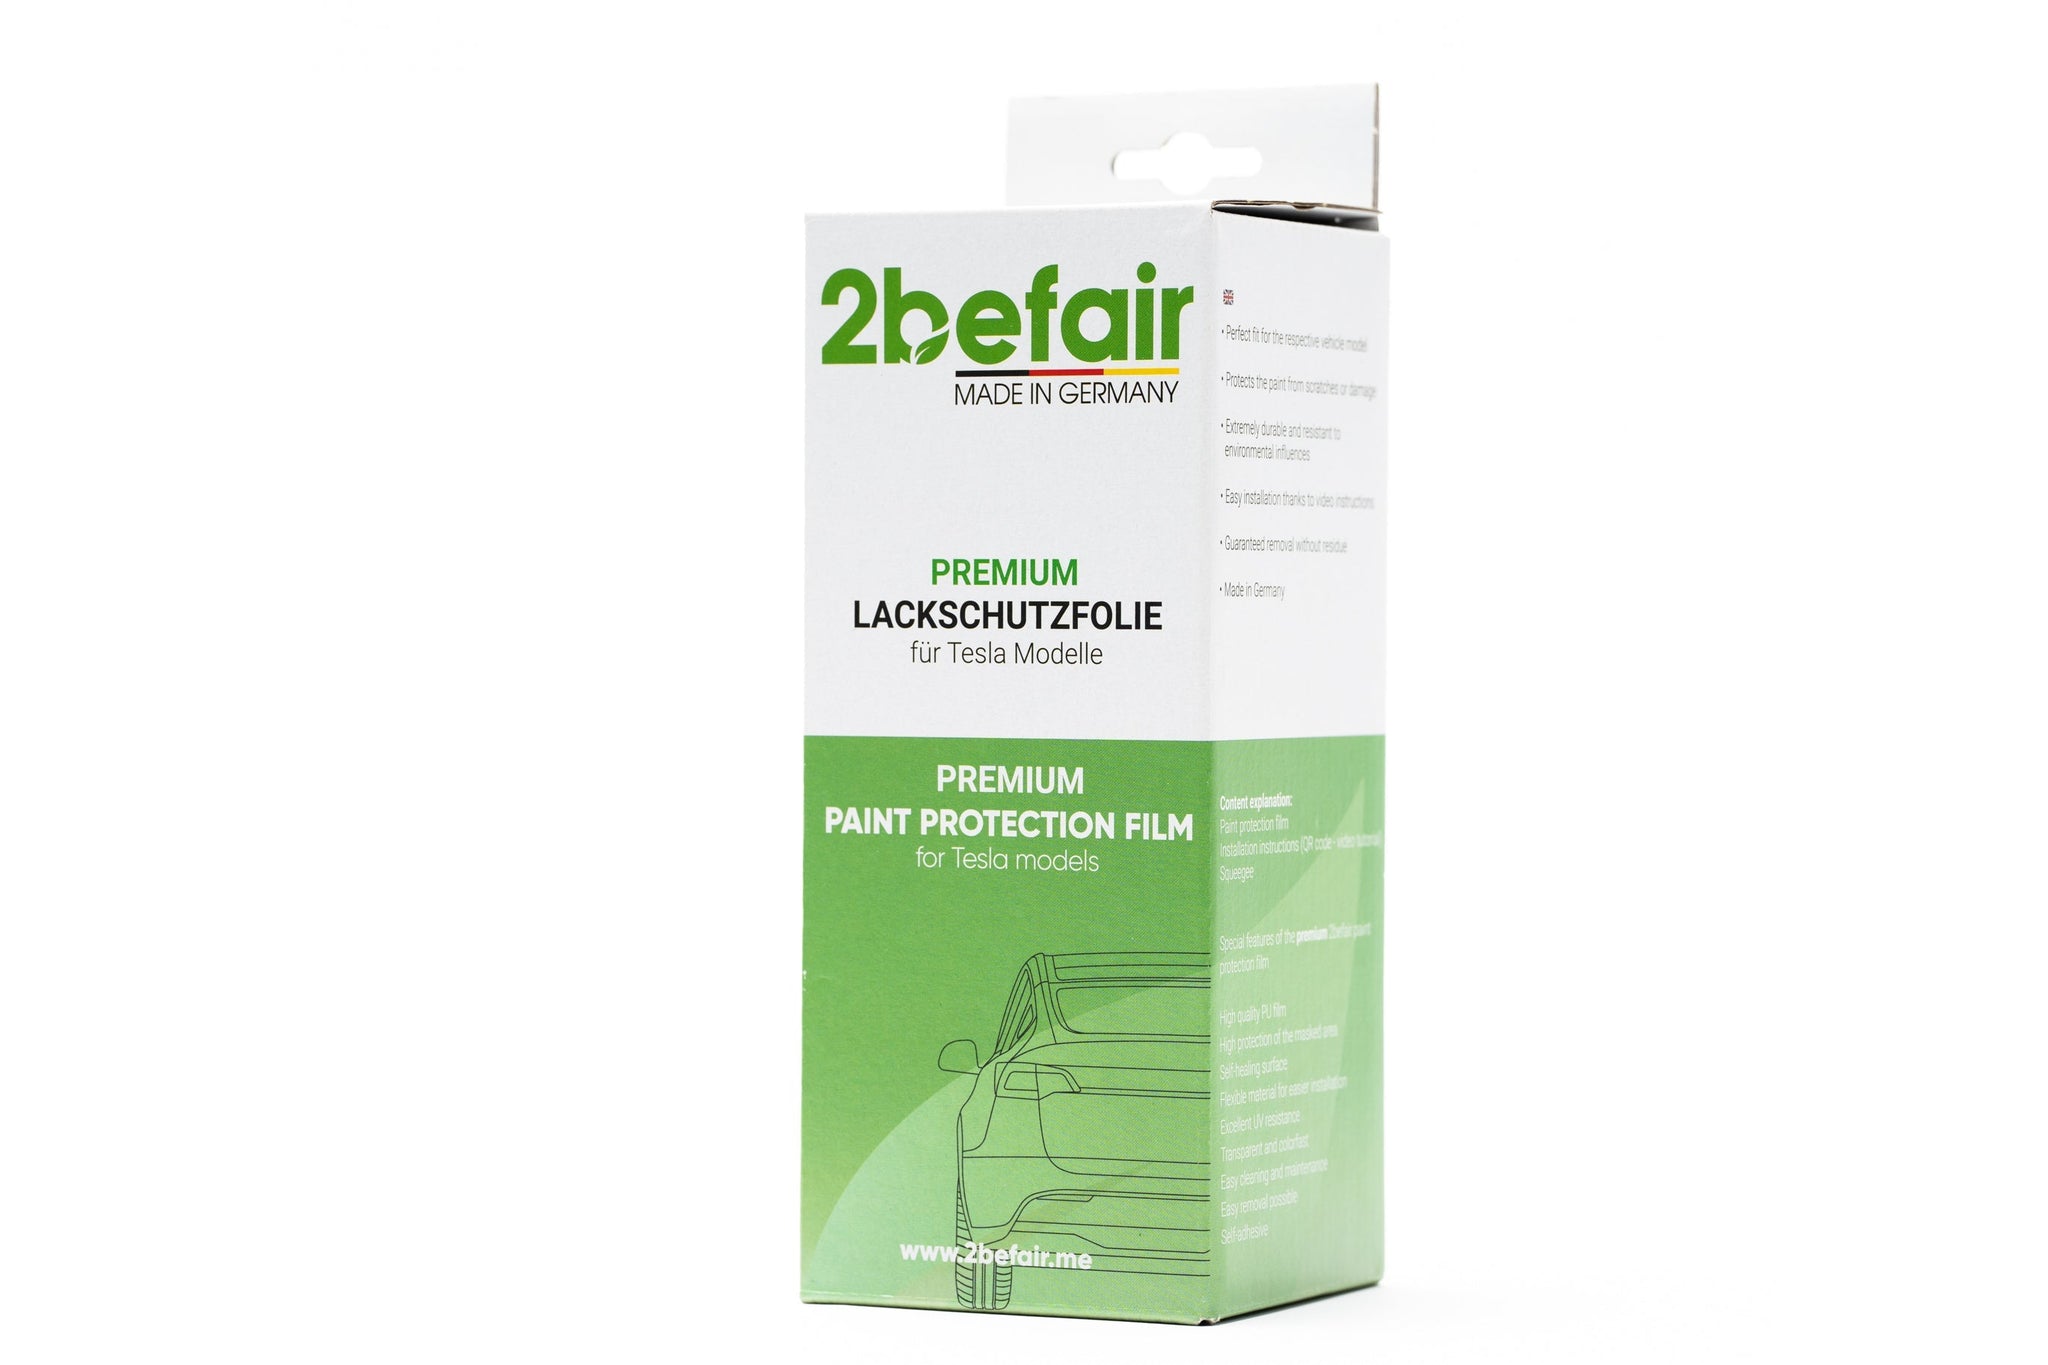 2befair paint protection film for the Tesla Model 3 loading edge